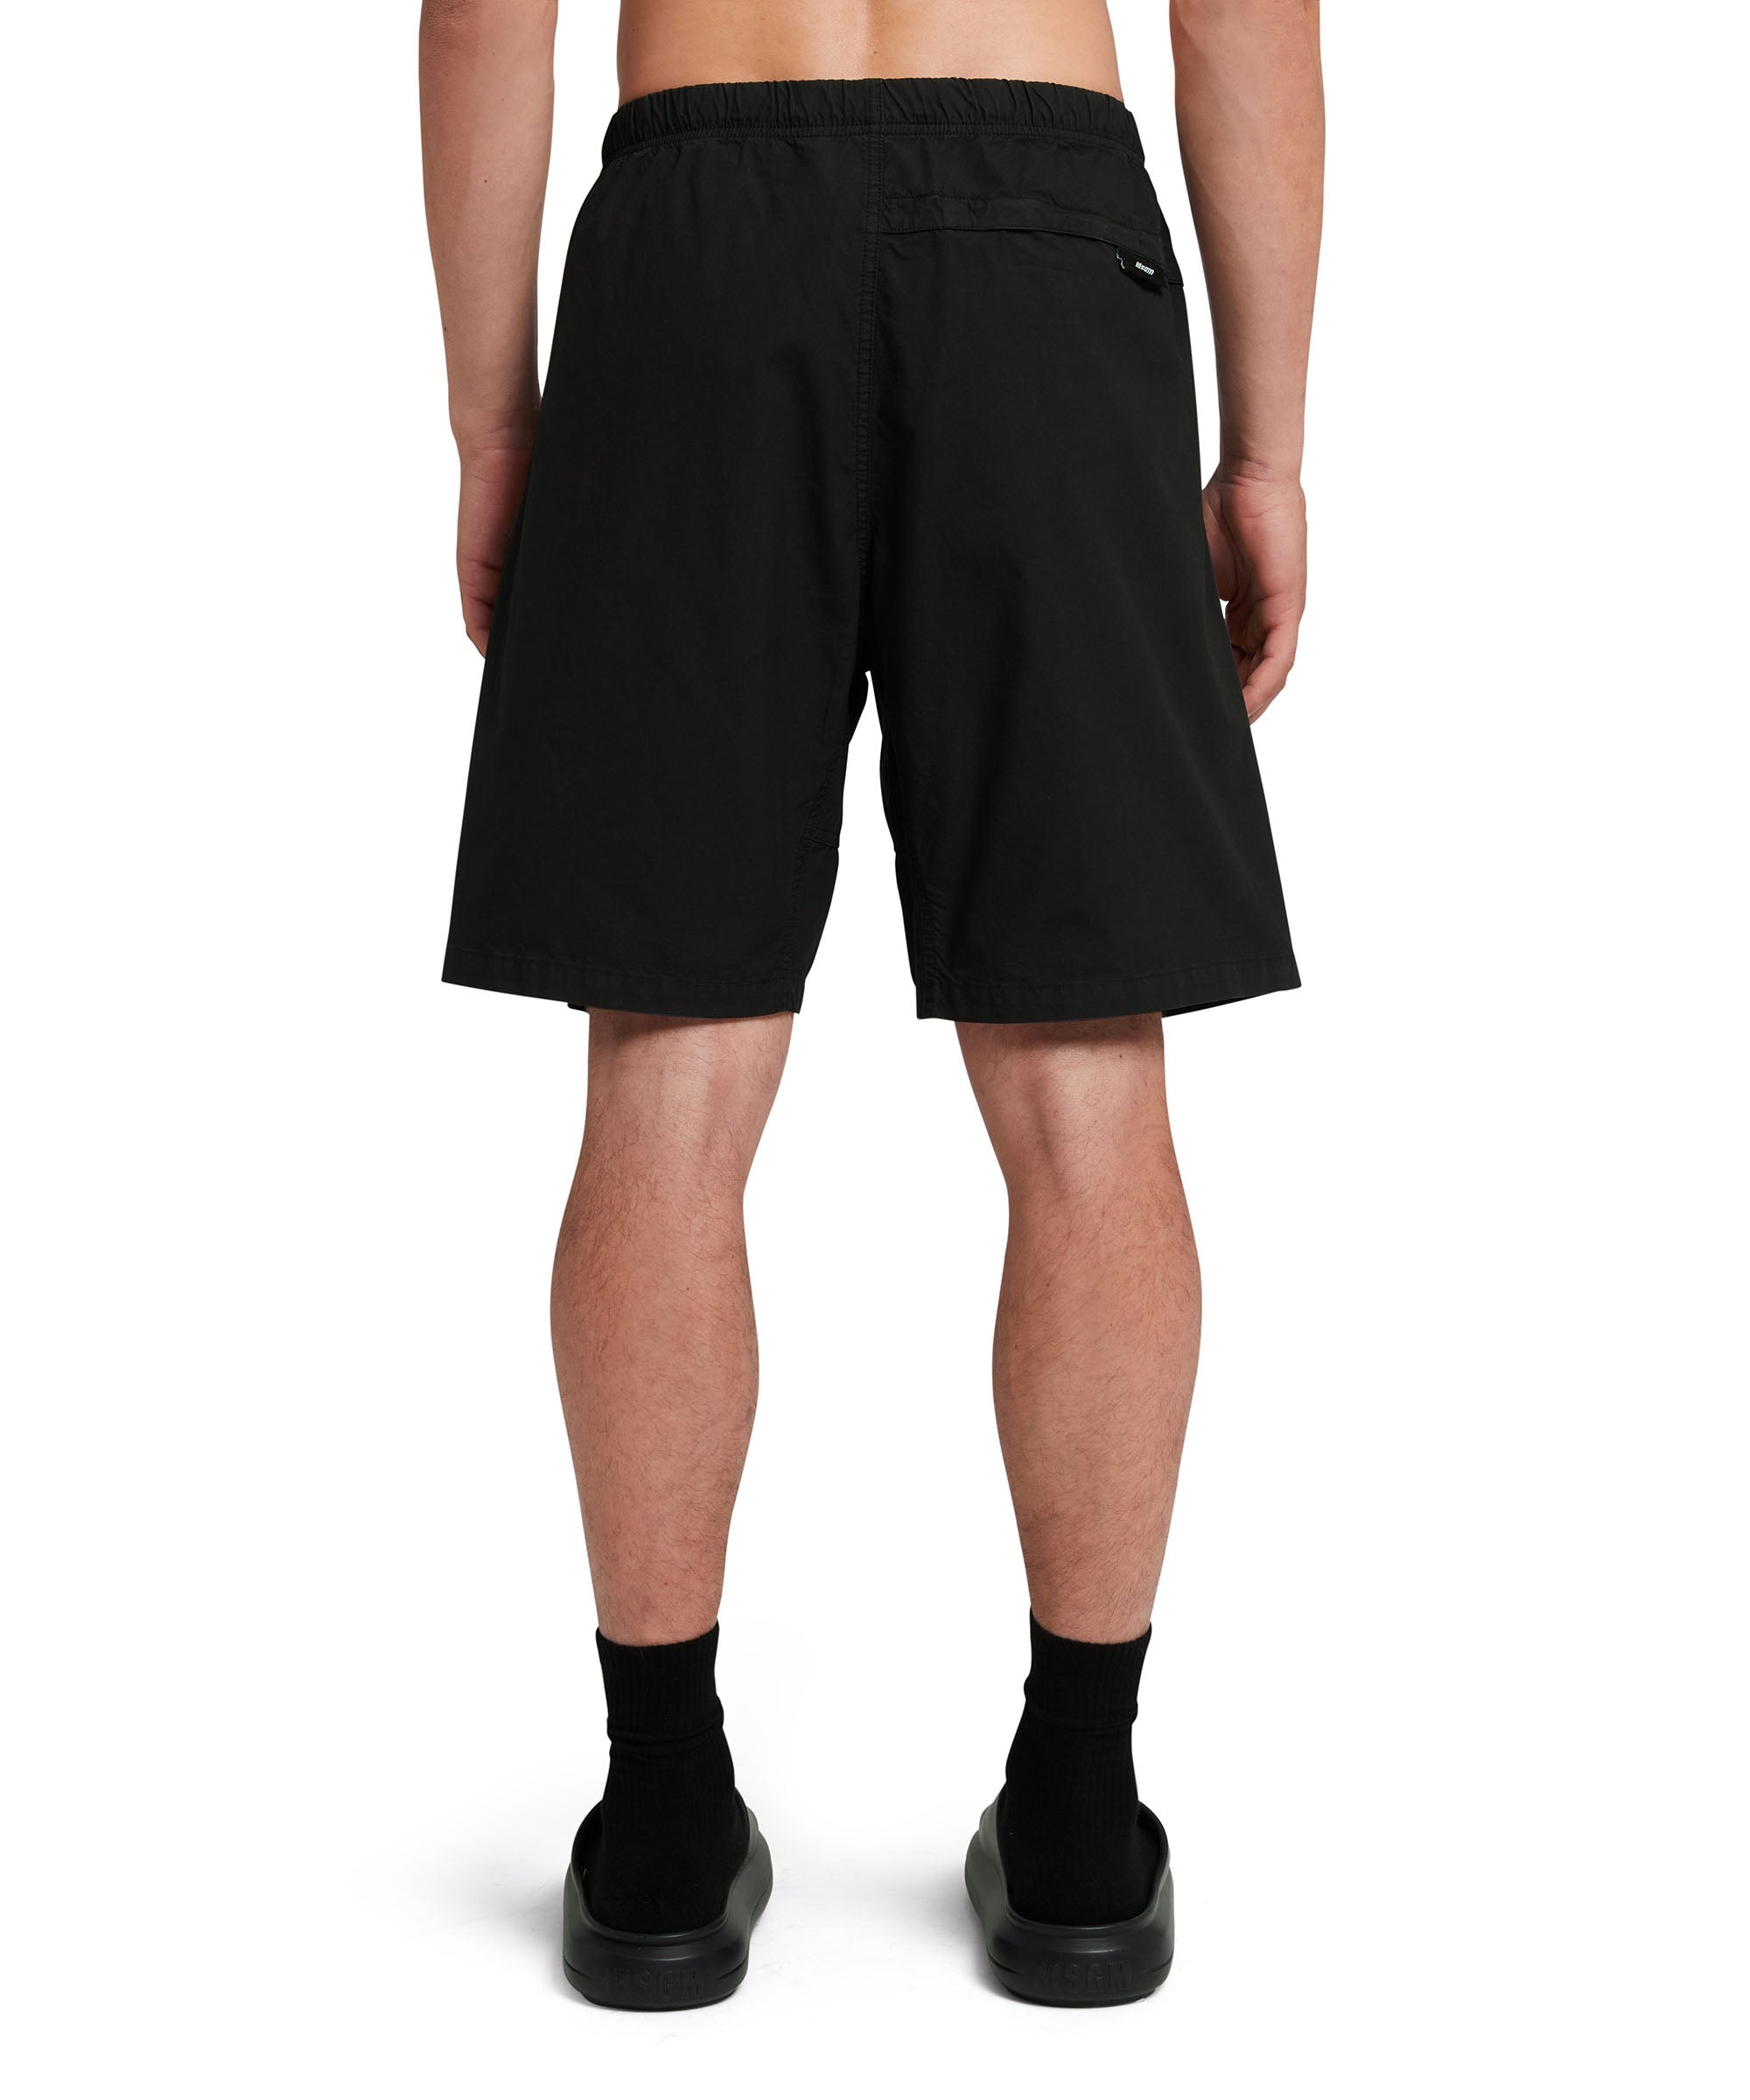 Poplin shorts - 3